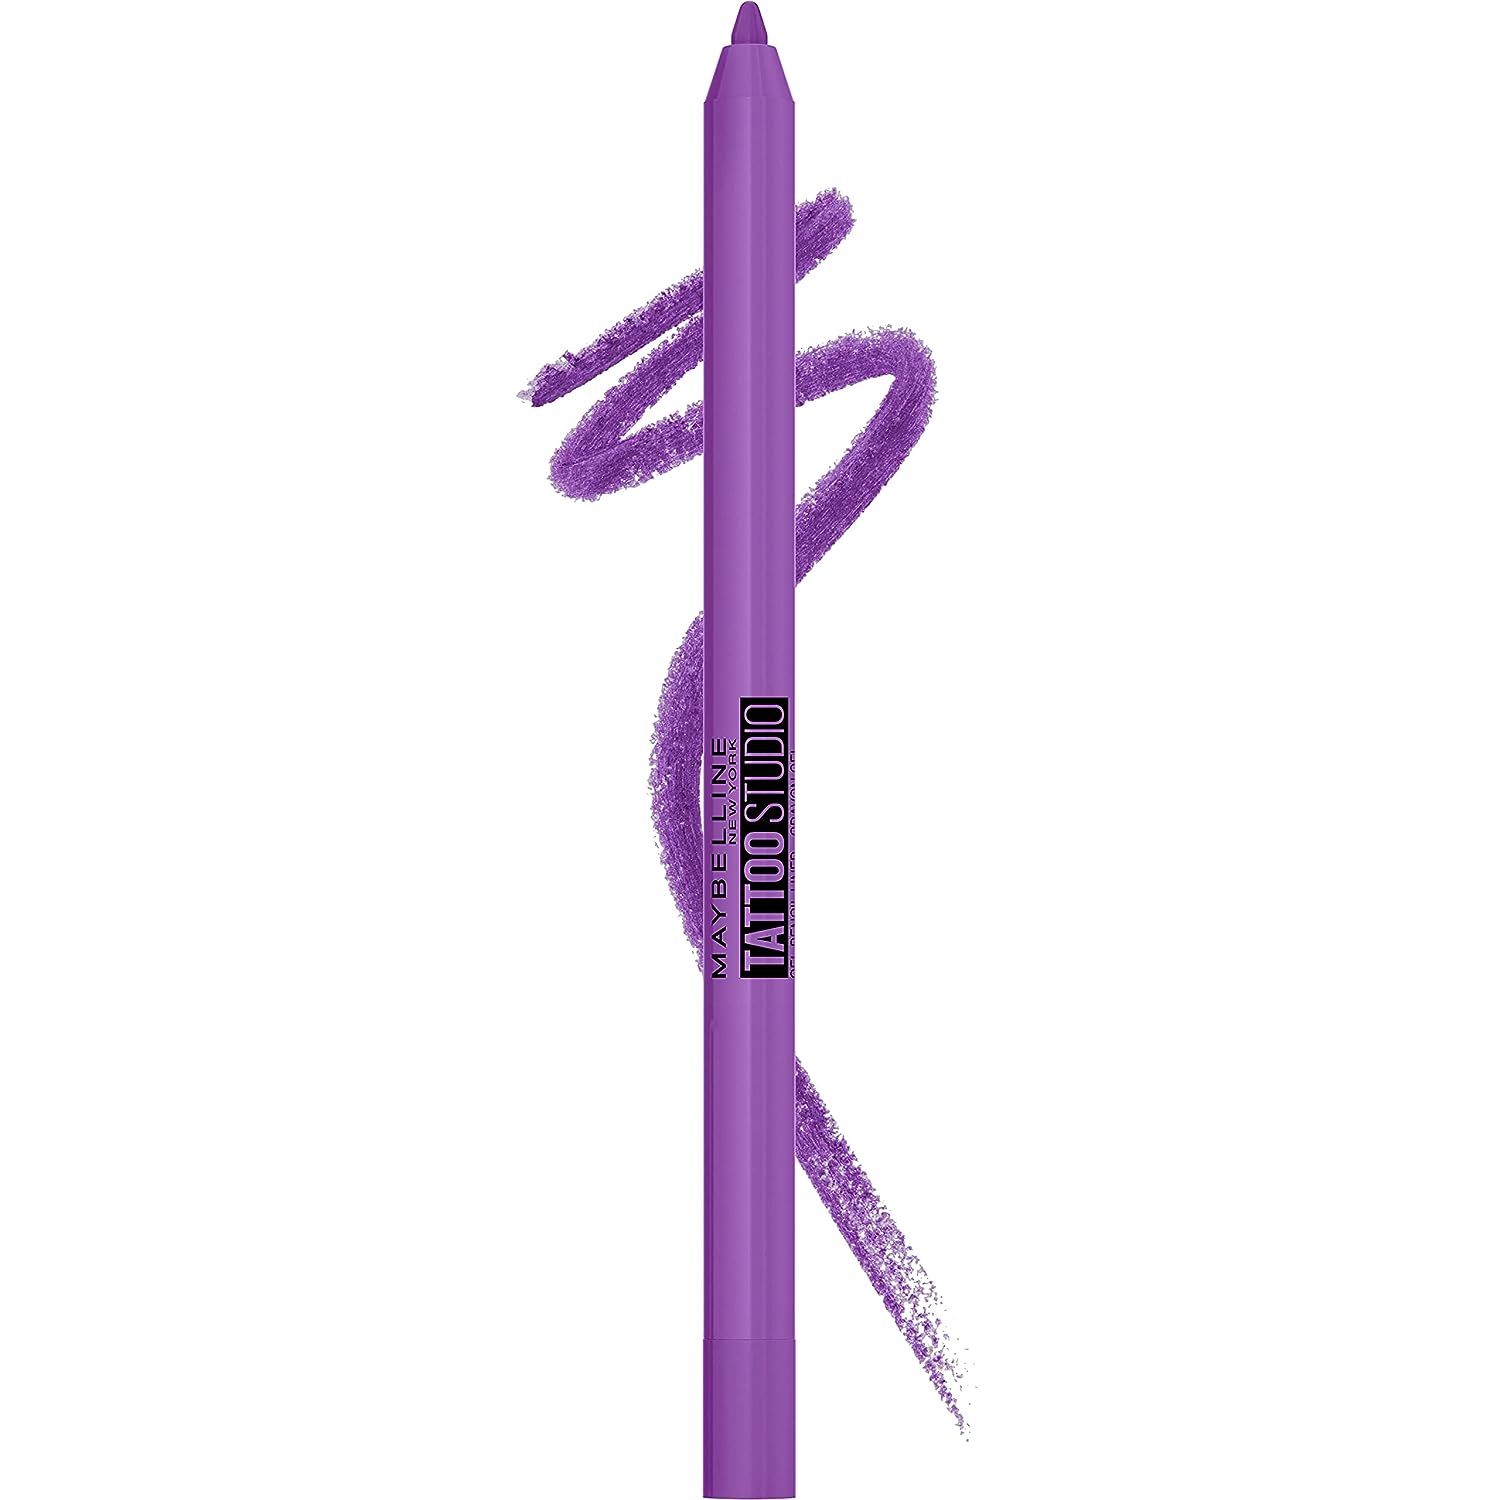 Maybelline New York Tattoo Studio Long-Lasting Sharpenable Eyeliner Pencil, Glide on Smooth Gel Pigments with 36 Hour Wear, Waterproof, Purple Pop, 0.04